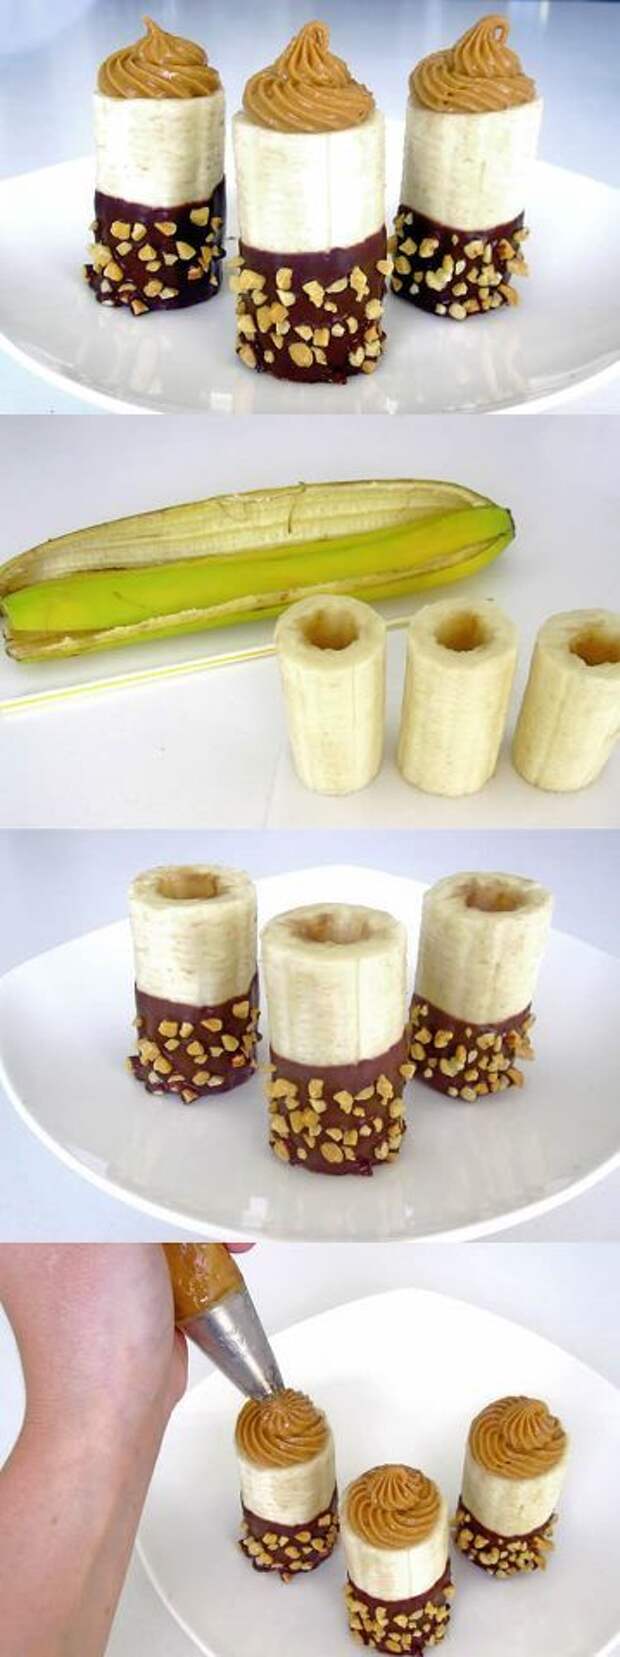 Chocolate Dipped Peanut Butter Stuffed Bananas: 